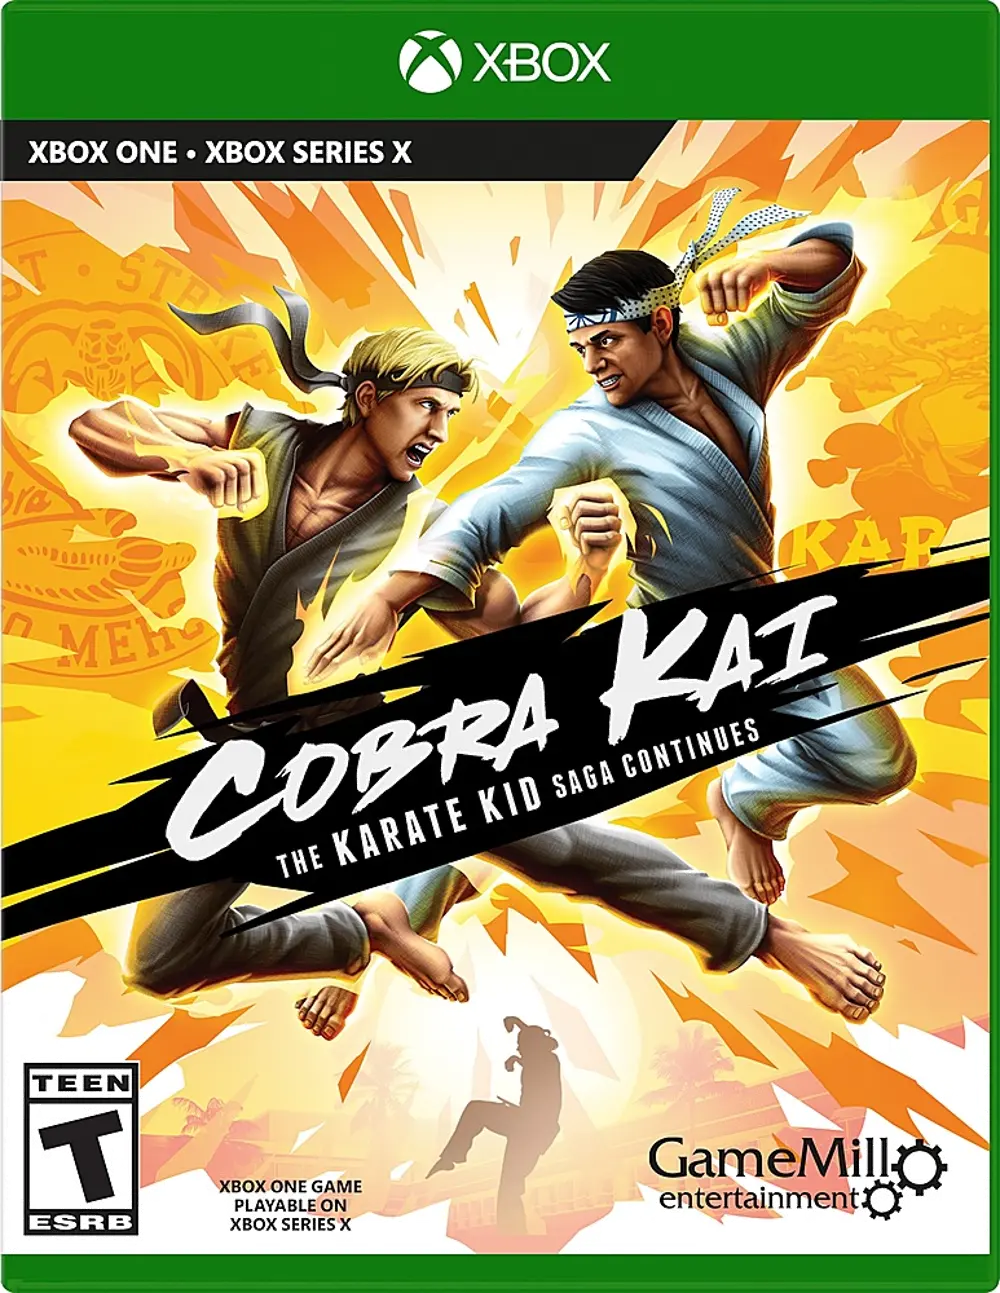 XB1 GME 00824 Cobra Kai: The Karate Kid Saga Continues - Xbox One, Xbox Series X-1